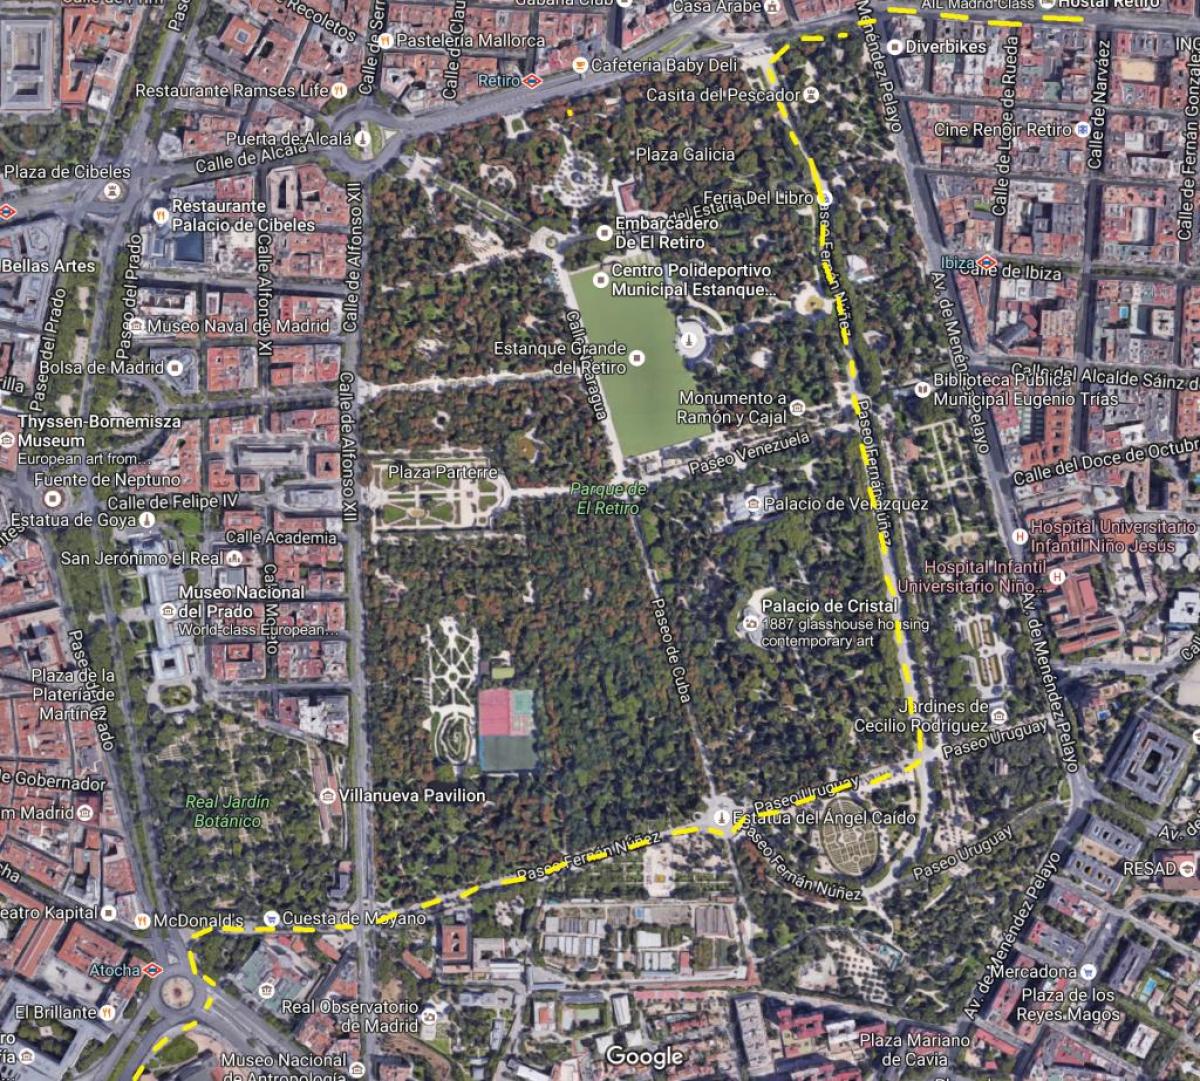 retiro park, di Madrid peta